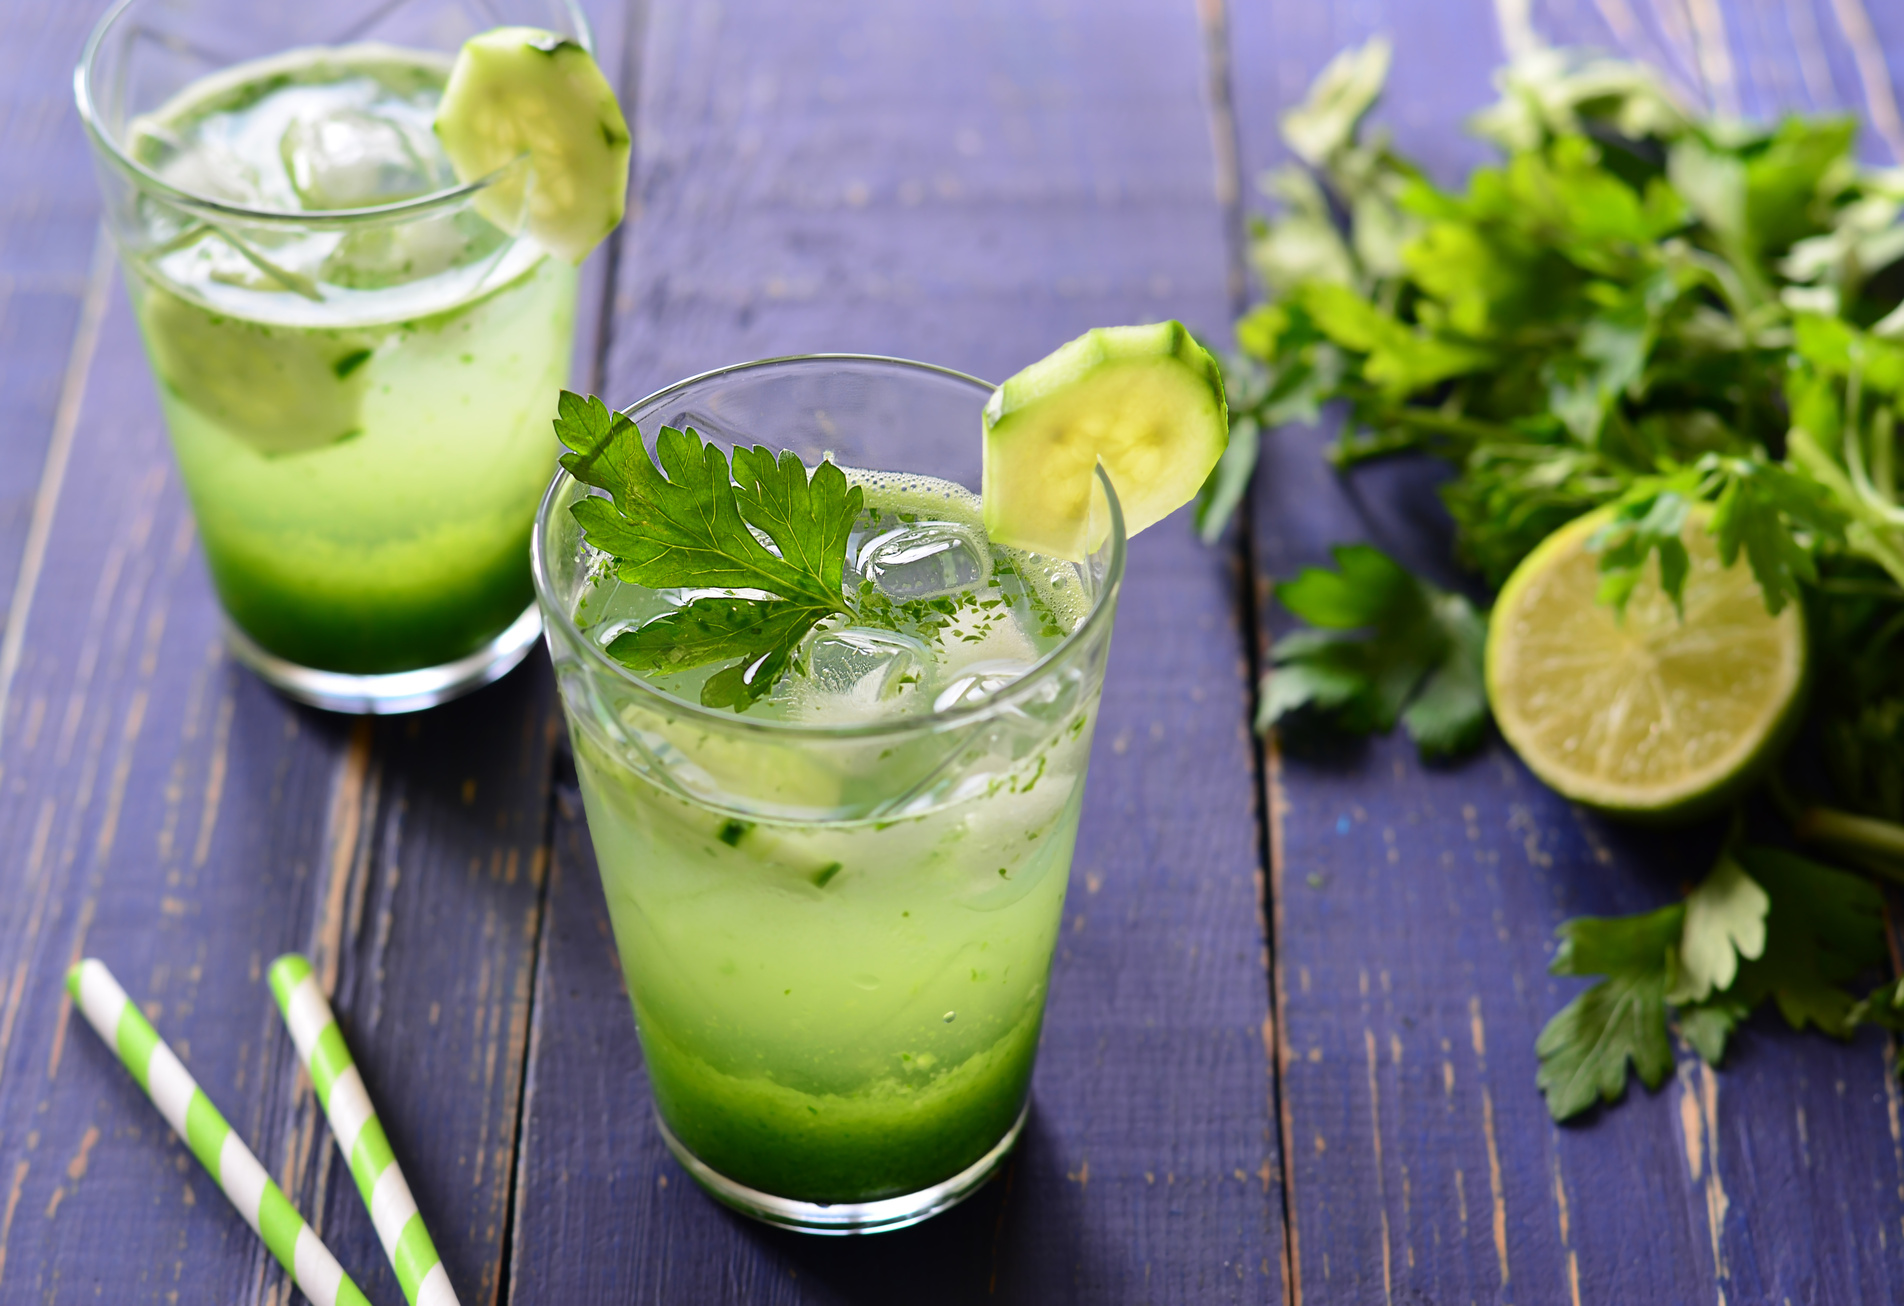 Healthy green detox drink